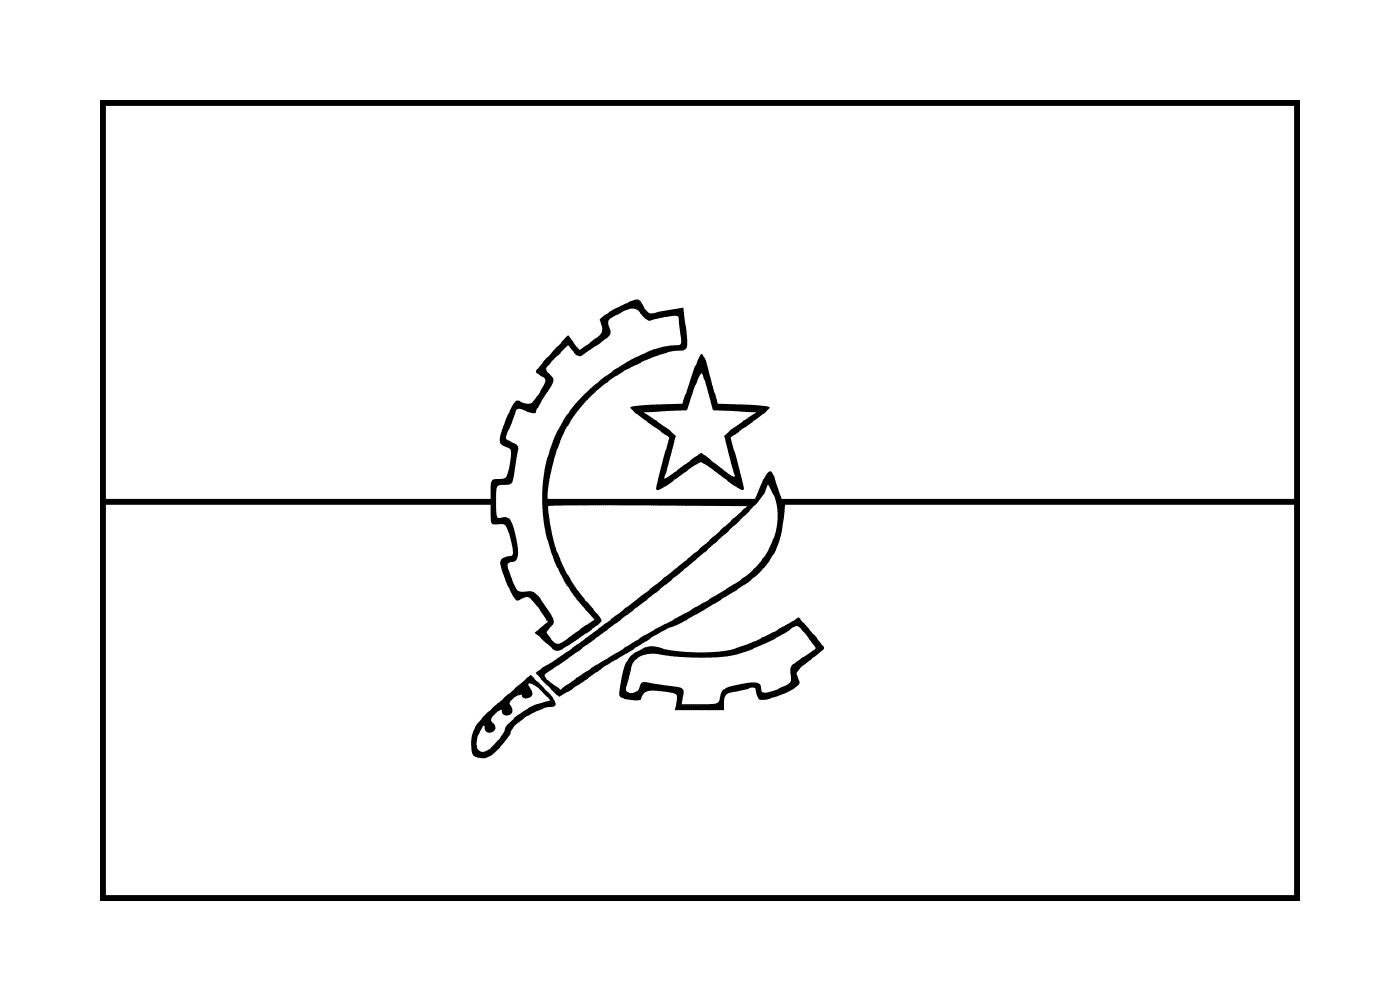  Flagge von Angola 